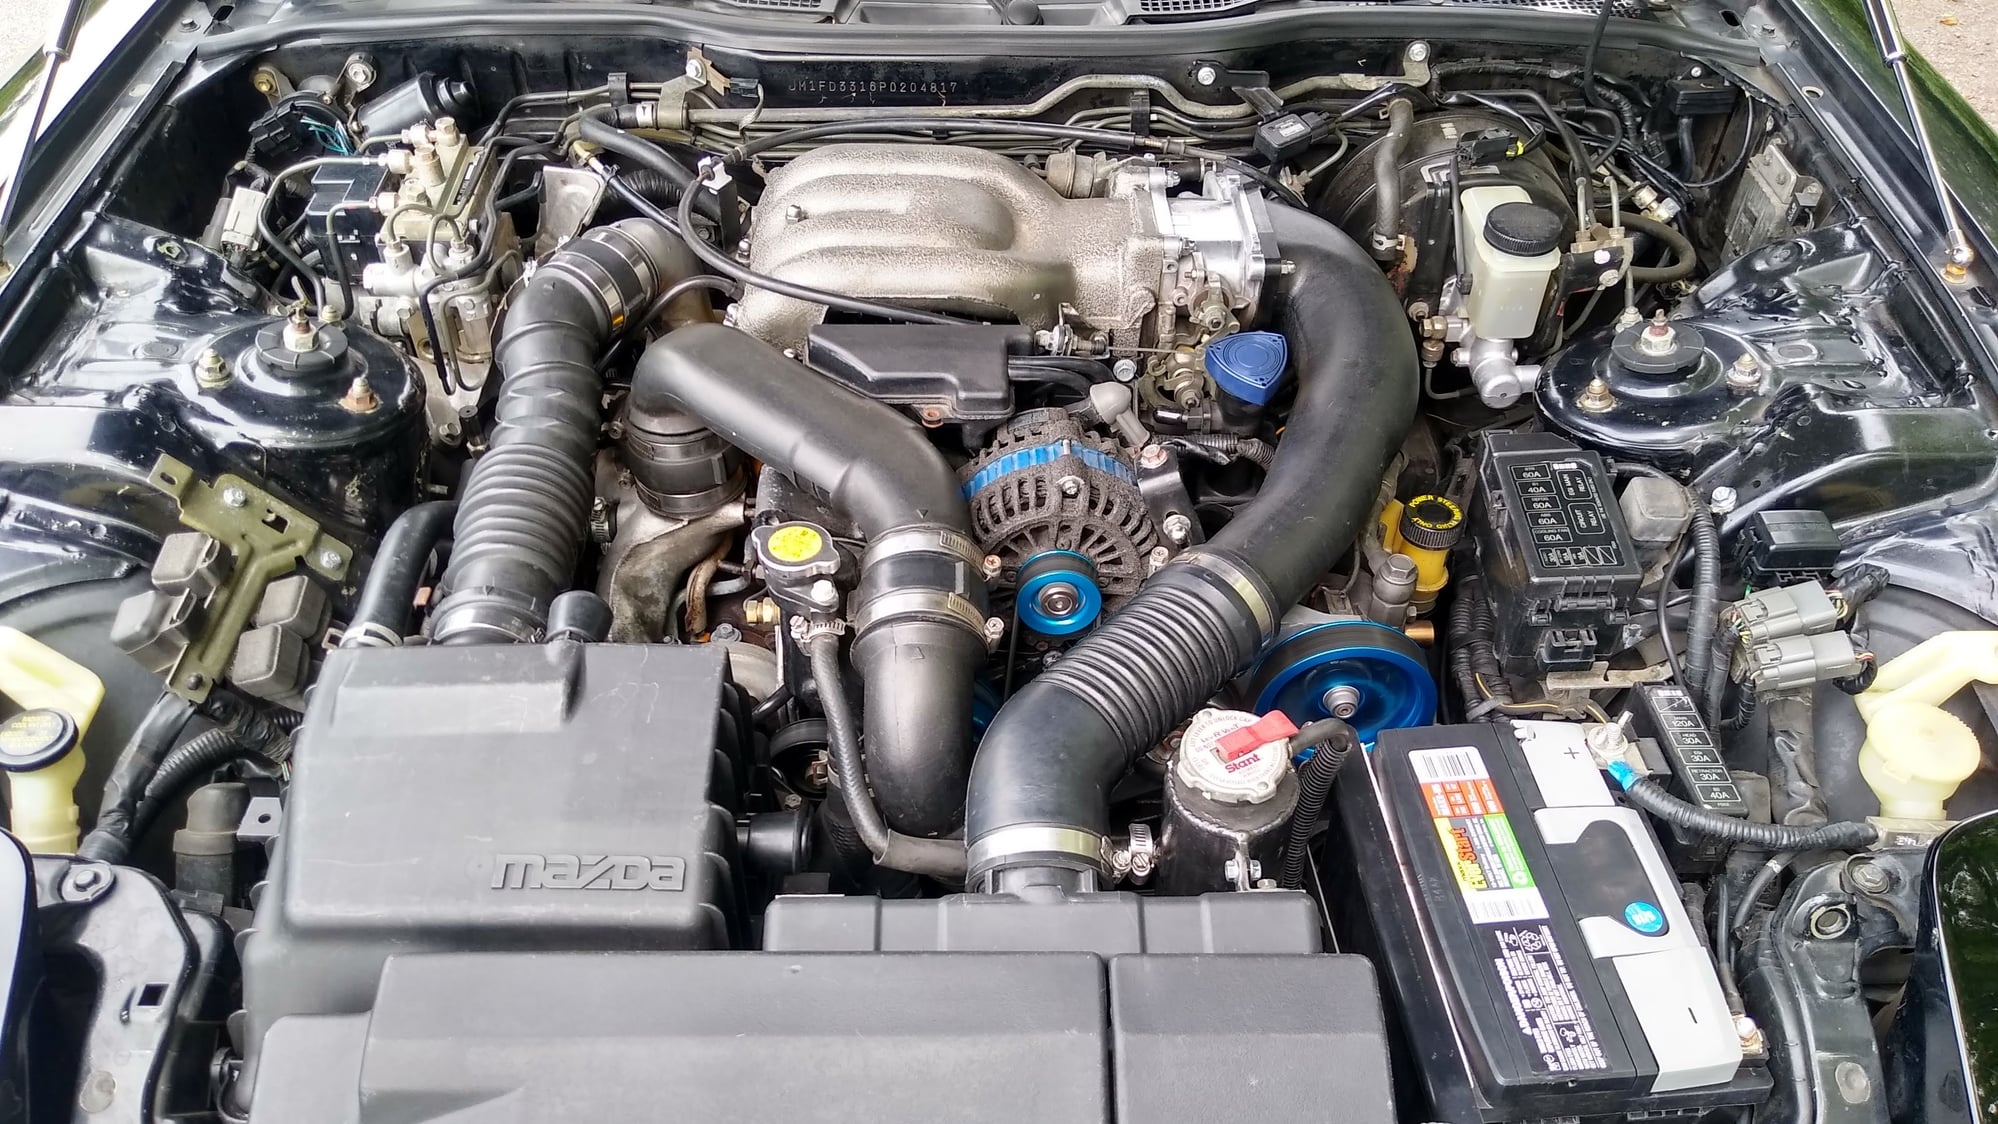 1993 Mazda RX-7 - 1993 Mazda RX-7 Touring - 76K Miles, Rebuilt Engine, Clean GA Title, Black - Used - VIN JM1FD3316P0204817 - 76,059 Miles - Other - 2WD - Manual - Coupe - Black - Dawsonville, GA 30534, United States